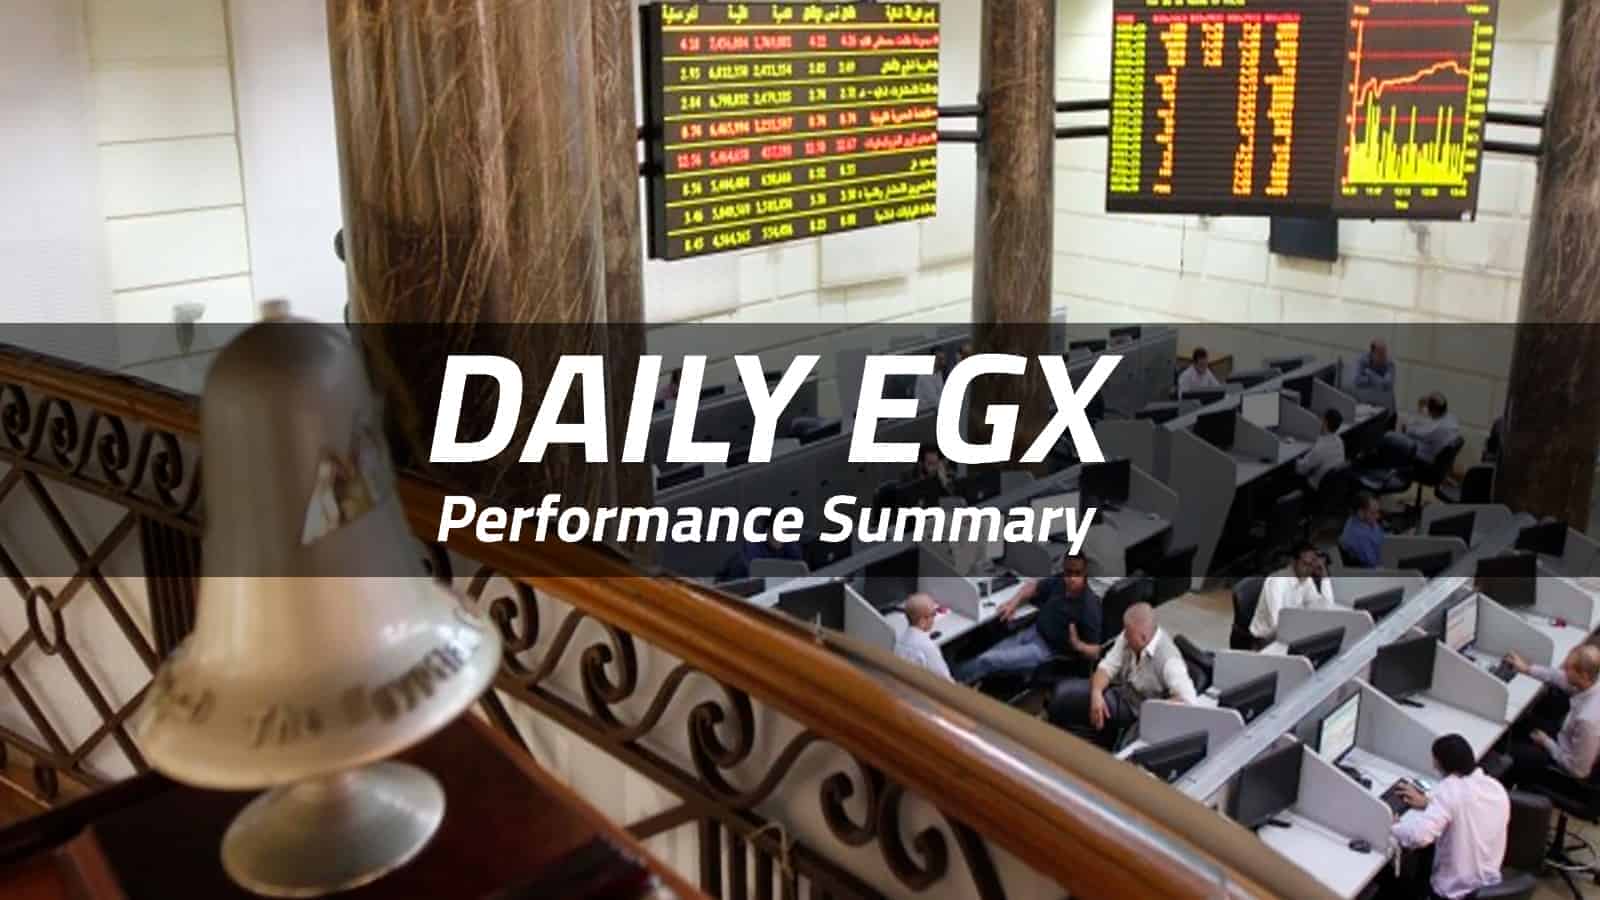 EGX sees bullish trend on Wednesday